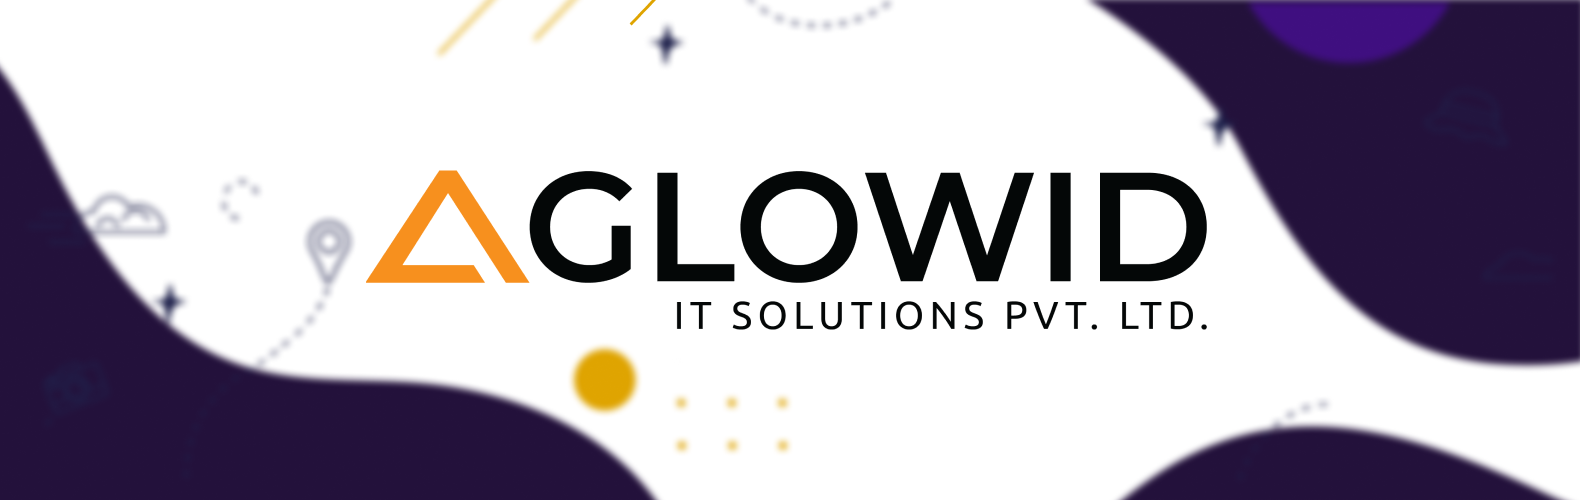 Aglowid IT Solutions